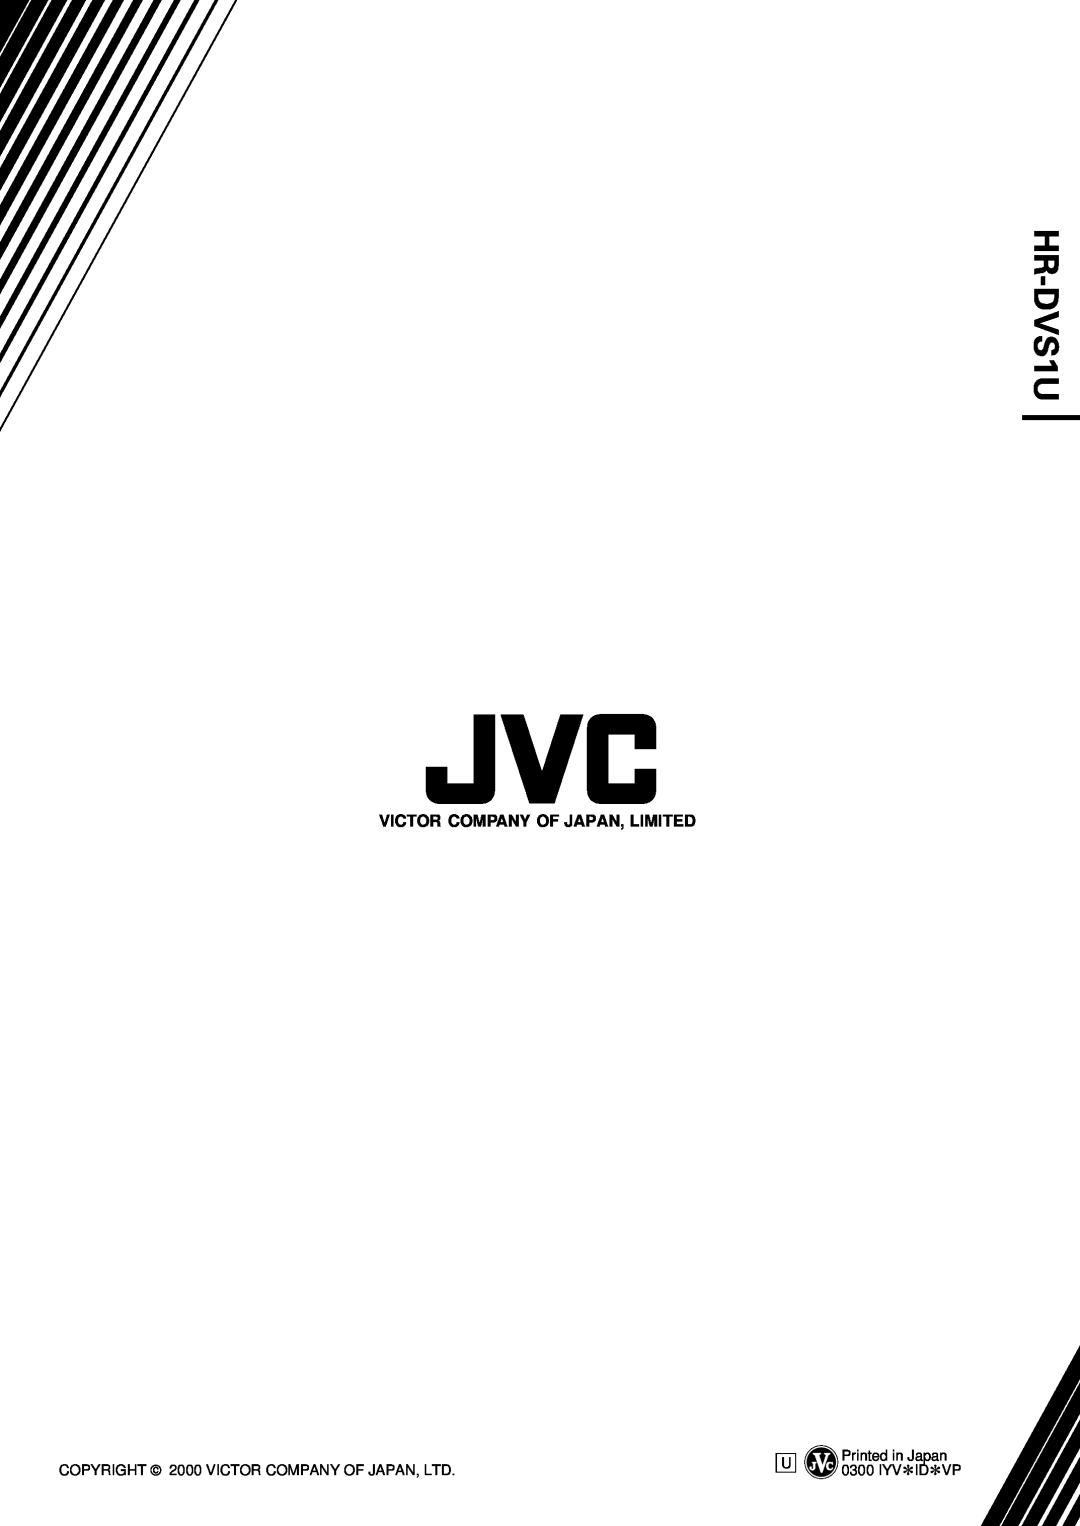 JVC Model HR-DVS1U manual Victor Company Of Japan, Limited, Printed in Japan 0300 IYV*ID*VP 